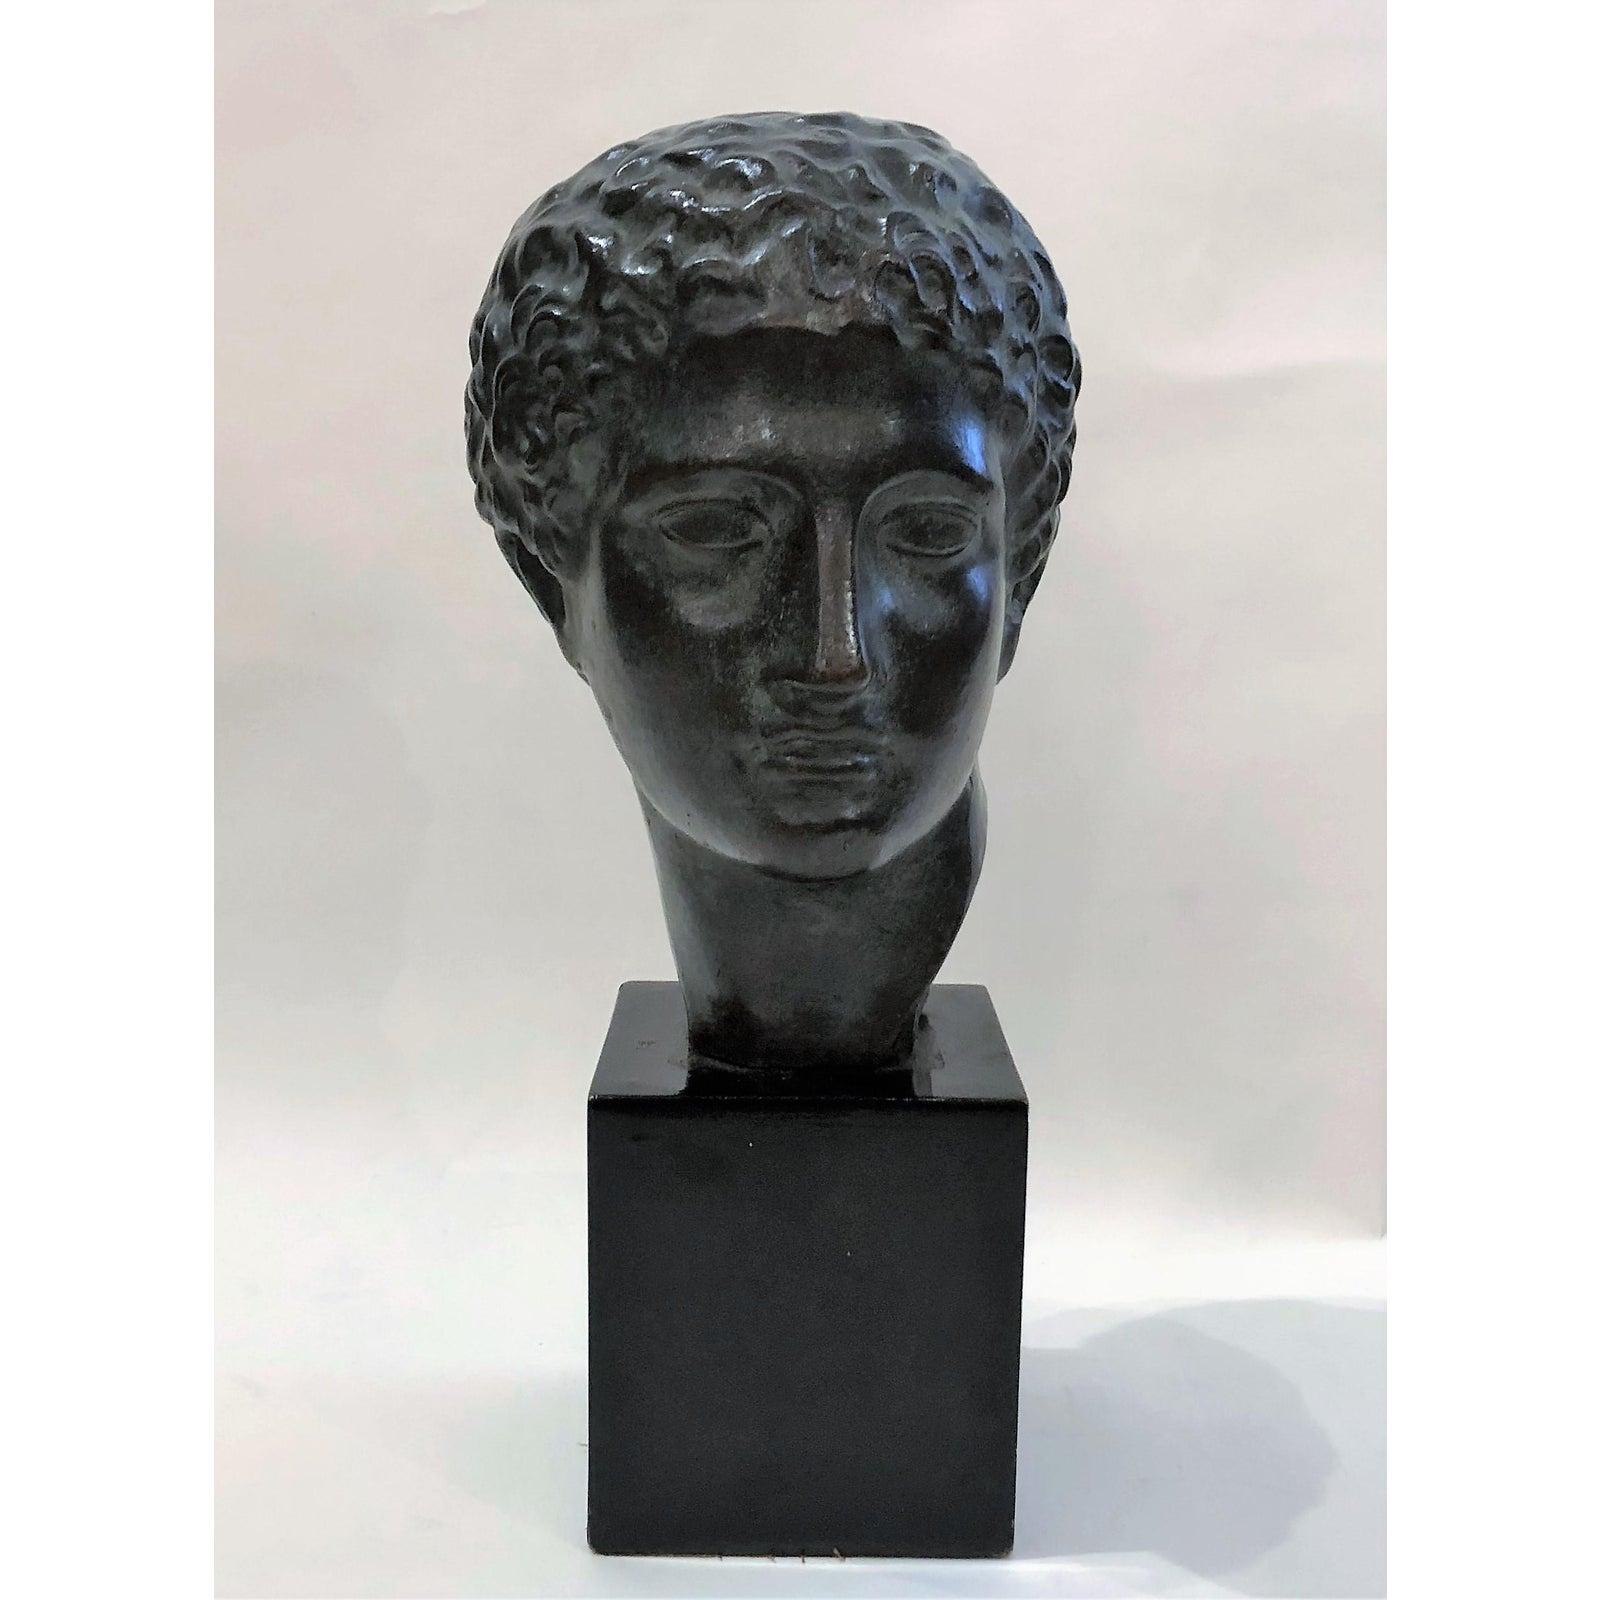 Antique bronze sculpture, Classic bronze bust casting of young Greek
Measures: 5-1/4